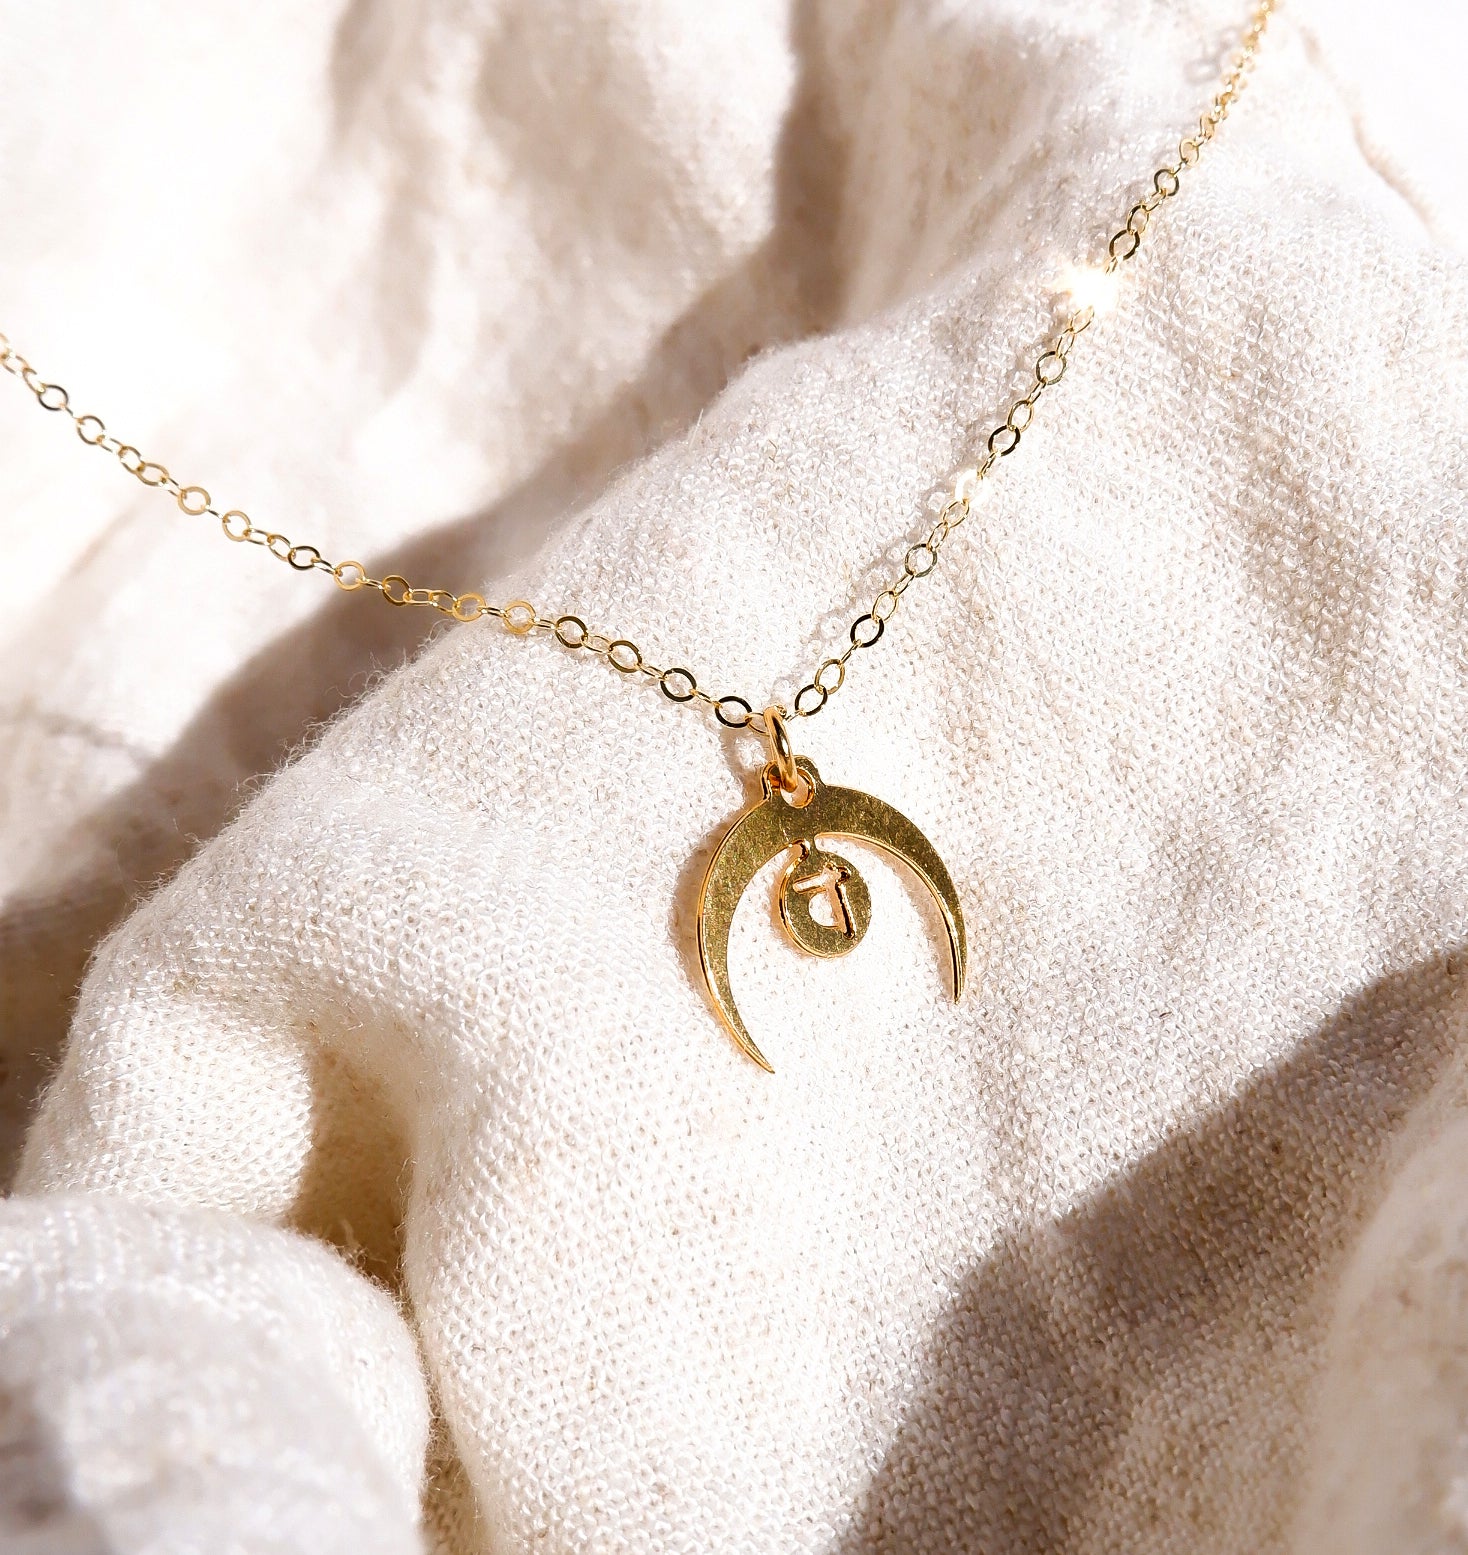 Crescent moon jewelry | sacral chakras healing jewelry